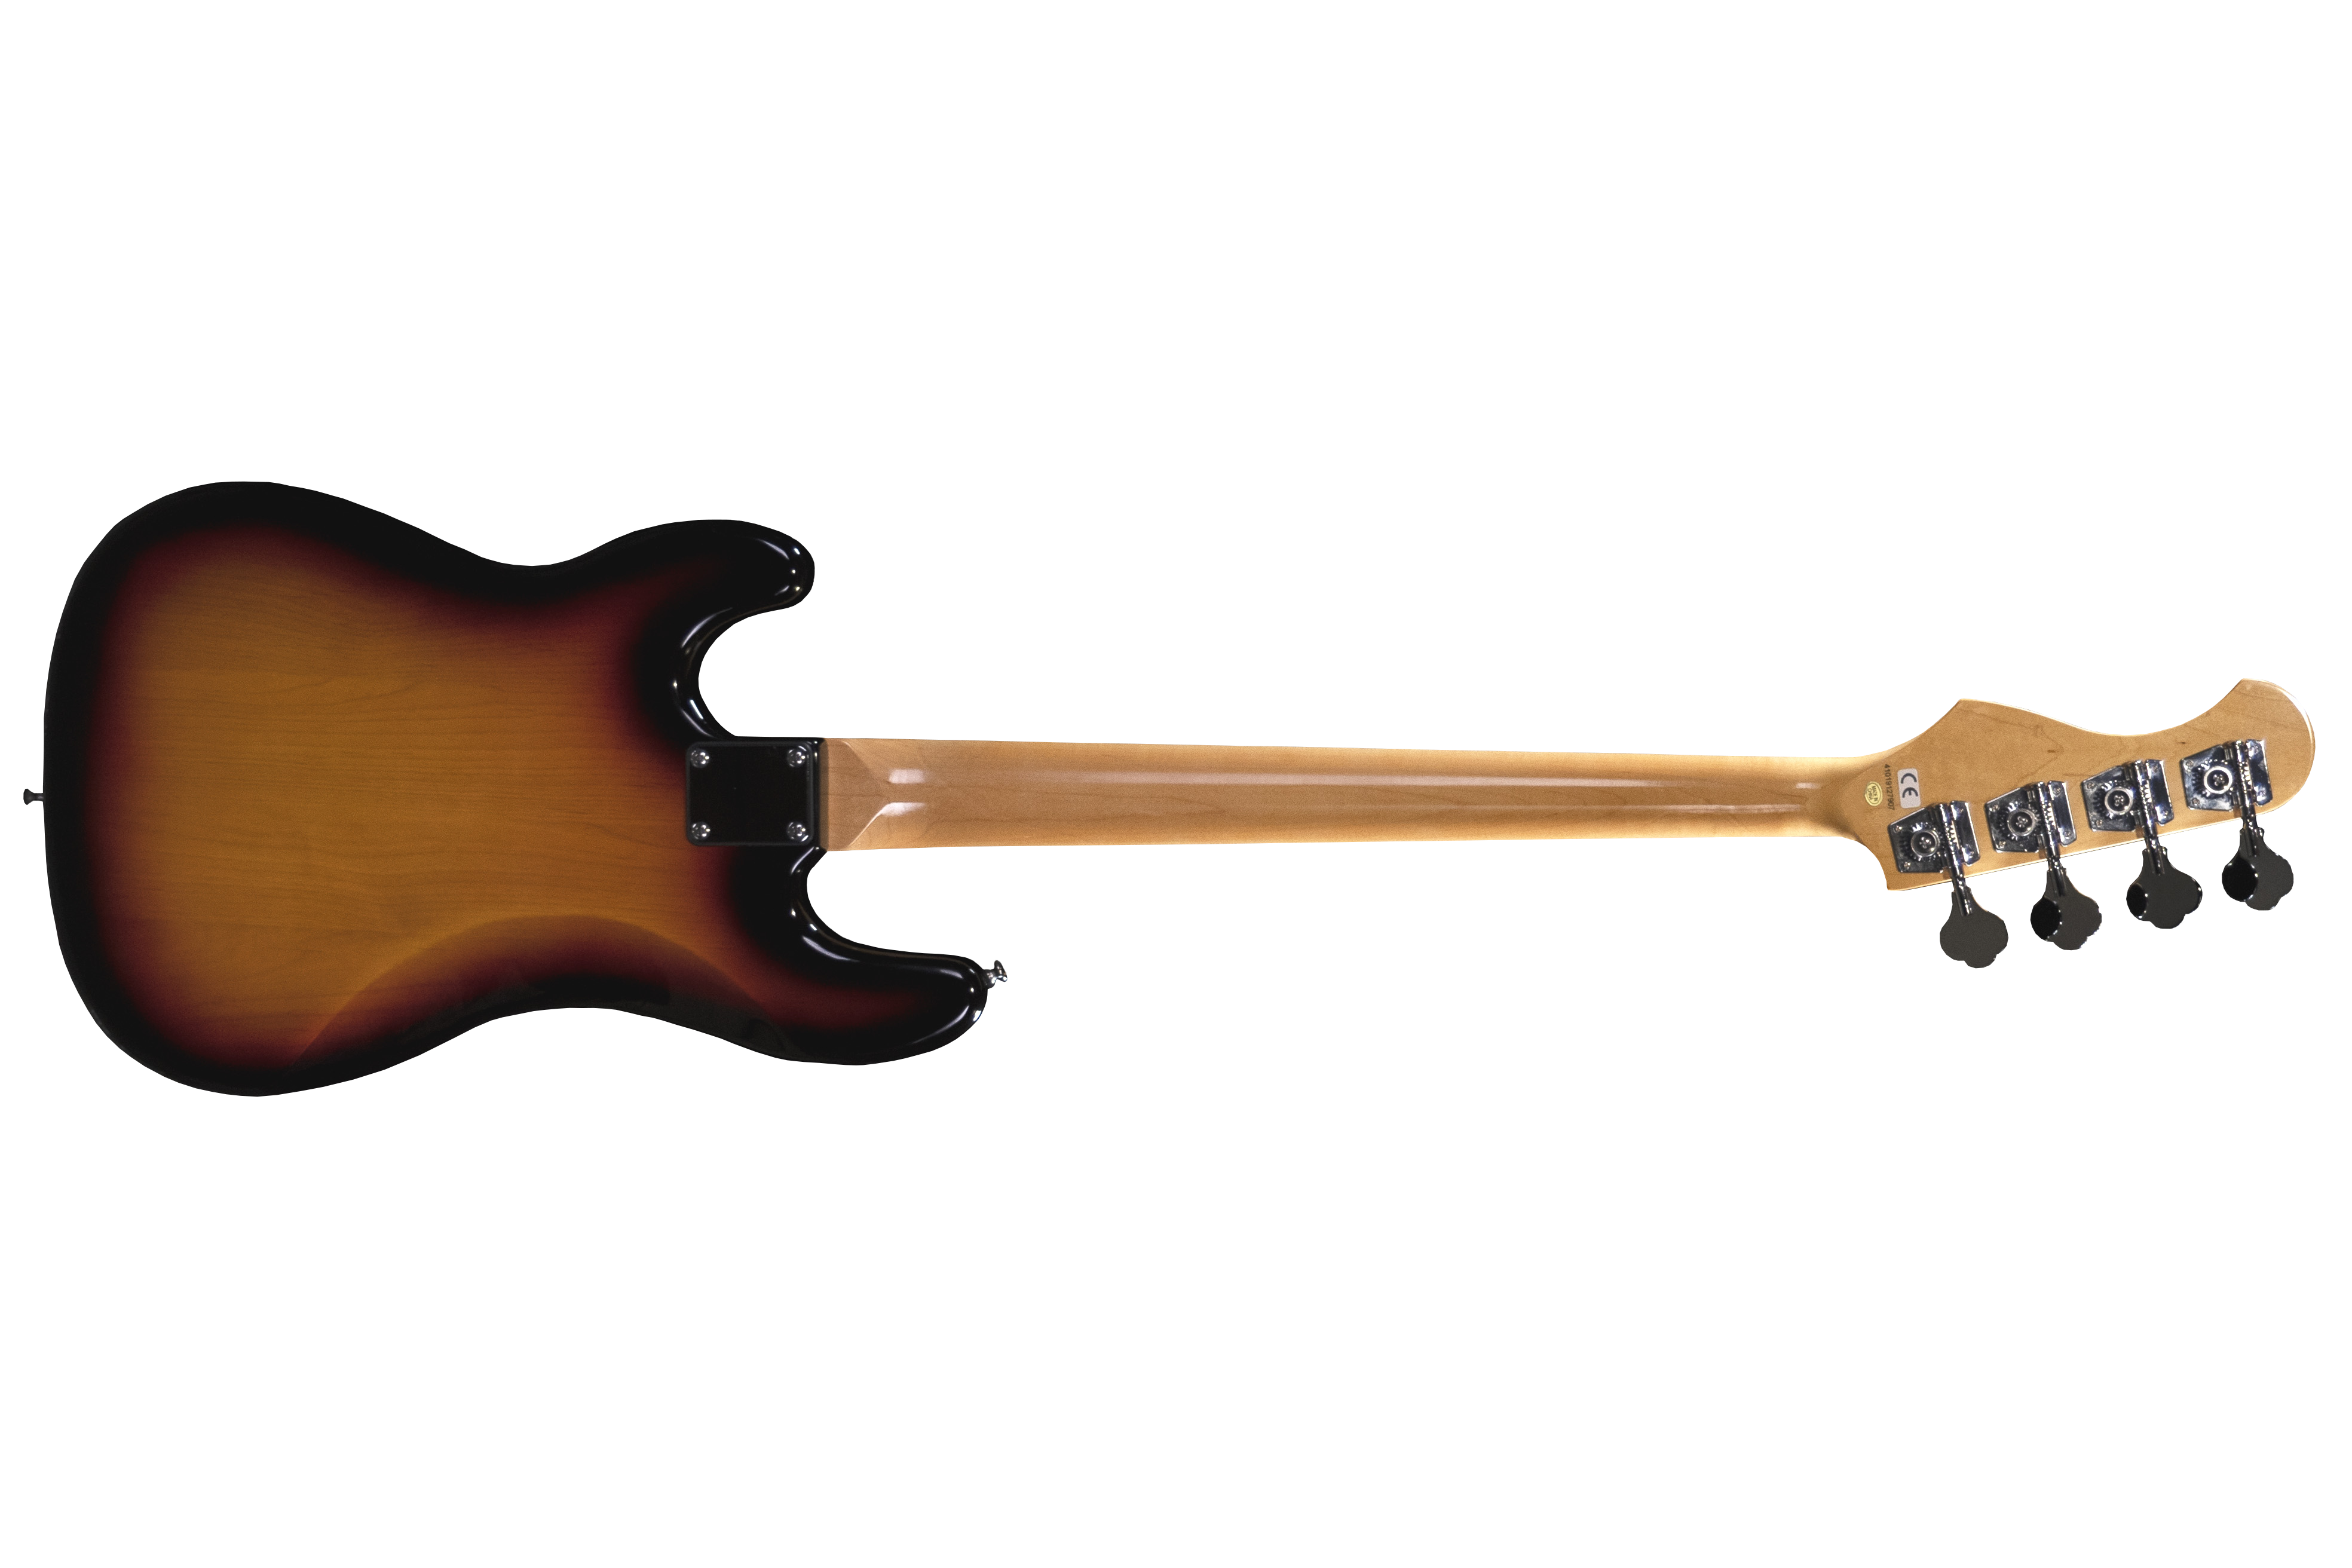 Guitare basse JB80MA ASH 5C